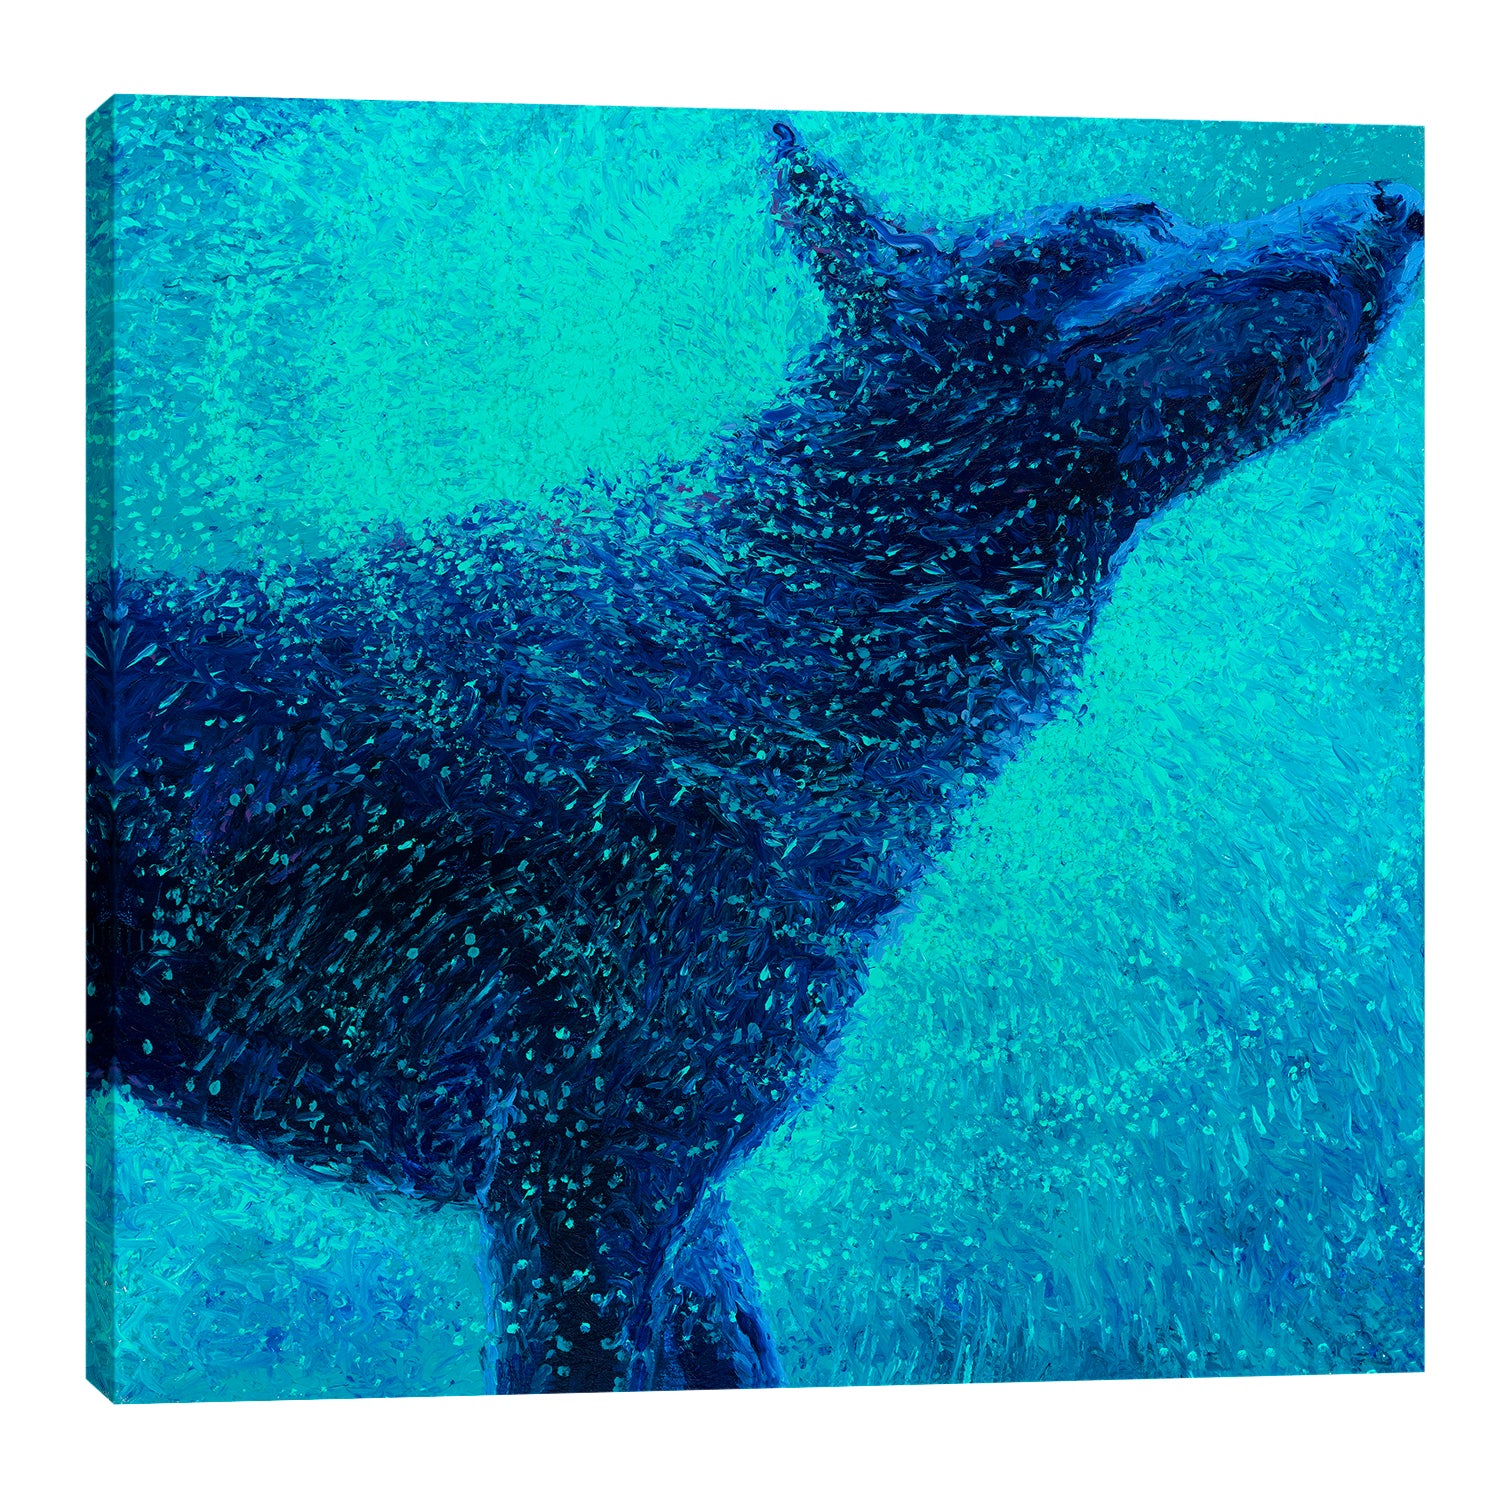 Iris-Scott,Modern & Contemporary,Animals,animals,animal,dogs,dog,wagging,shaking,water drops,blue,splatter,